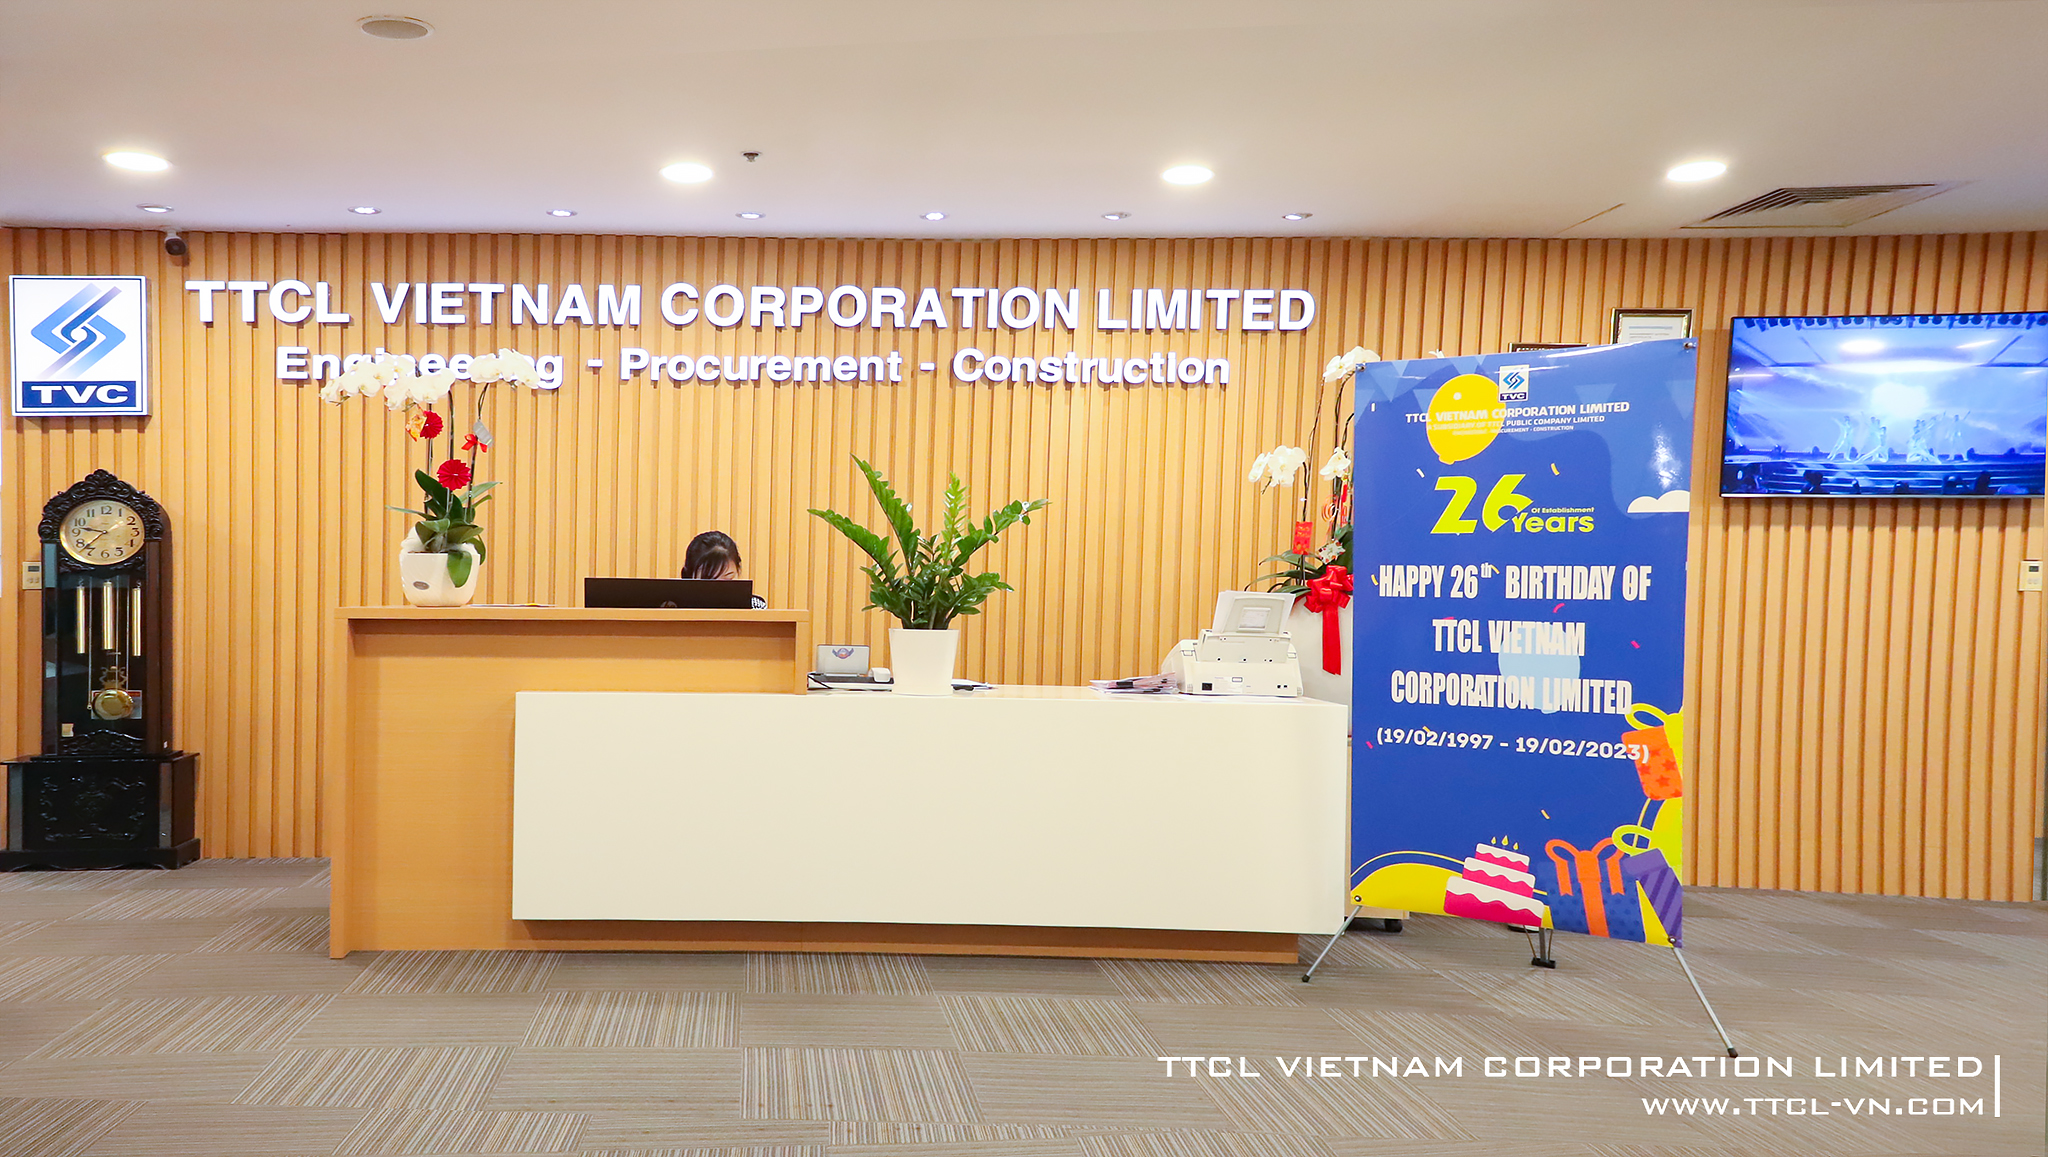 TTCL Vietnam’s 26th birthday